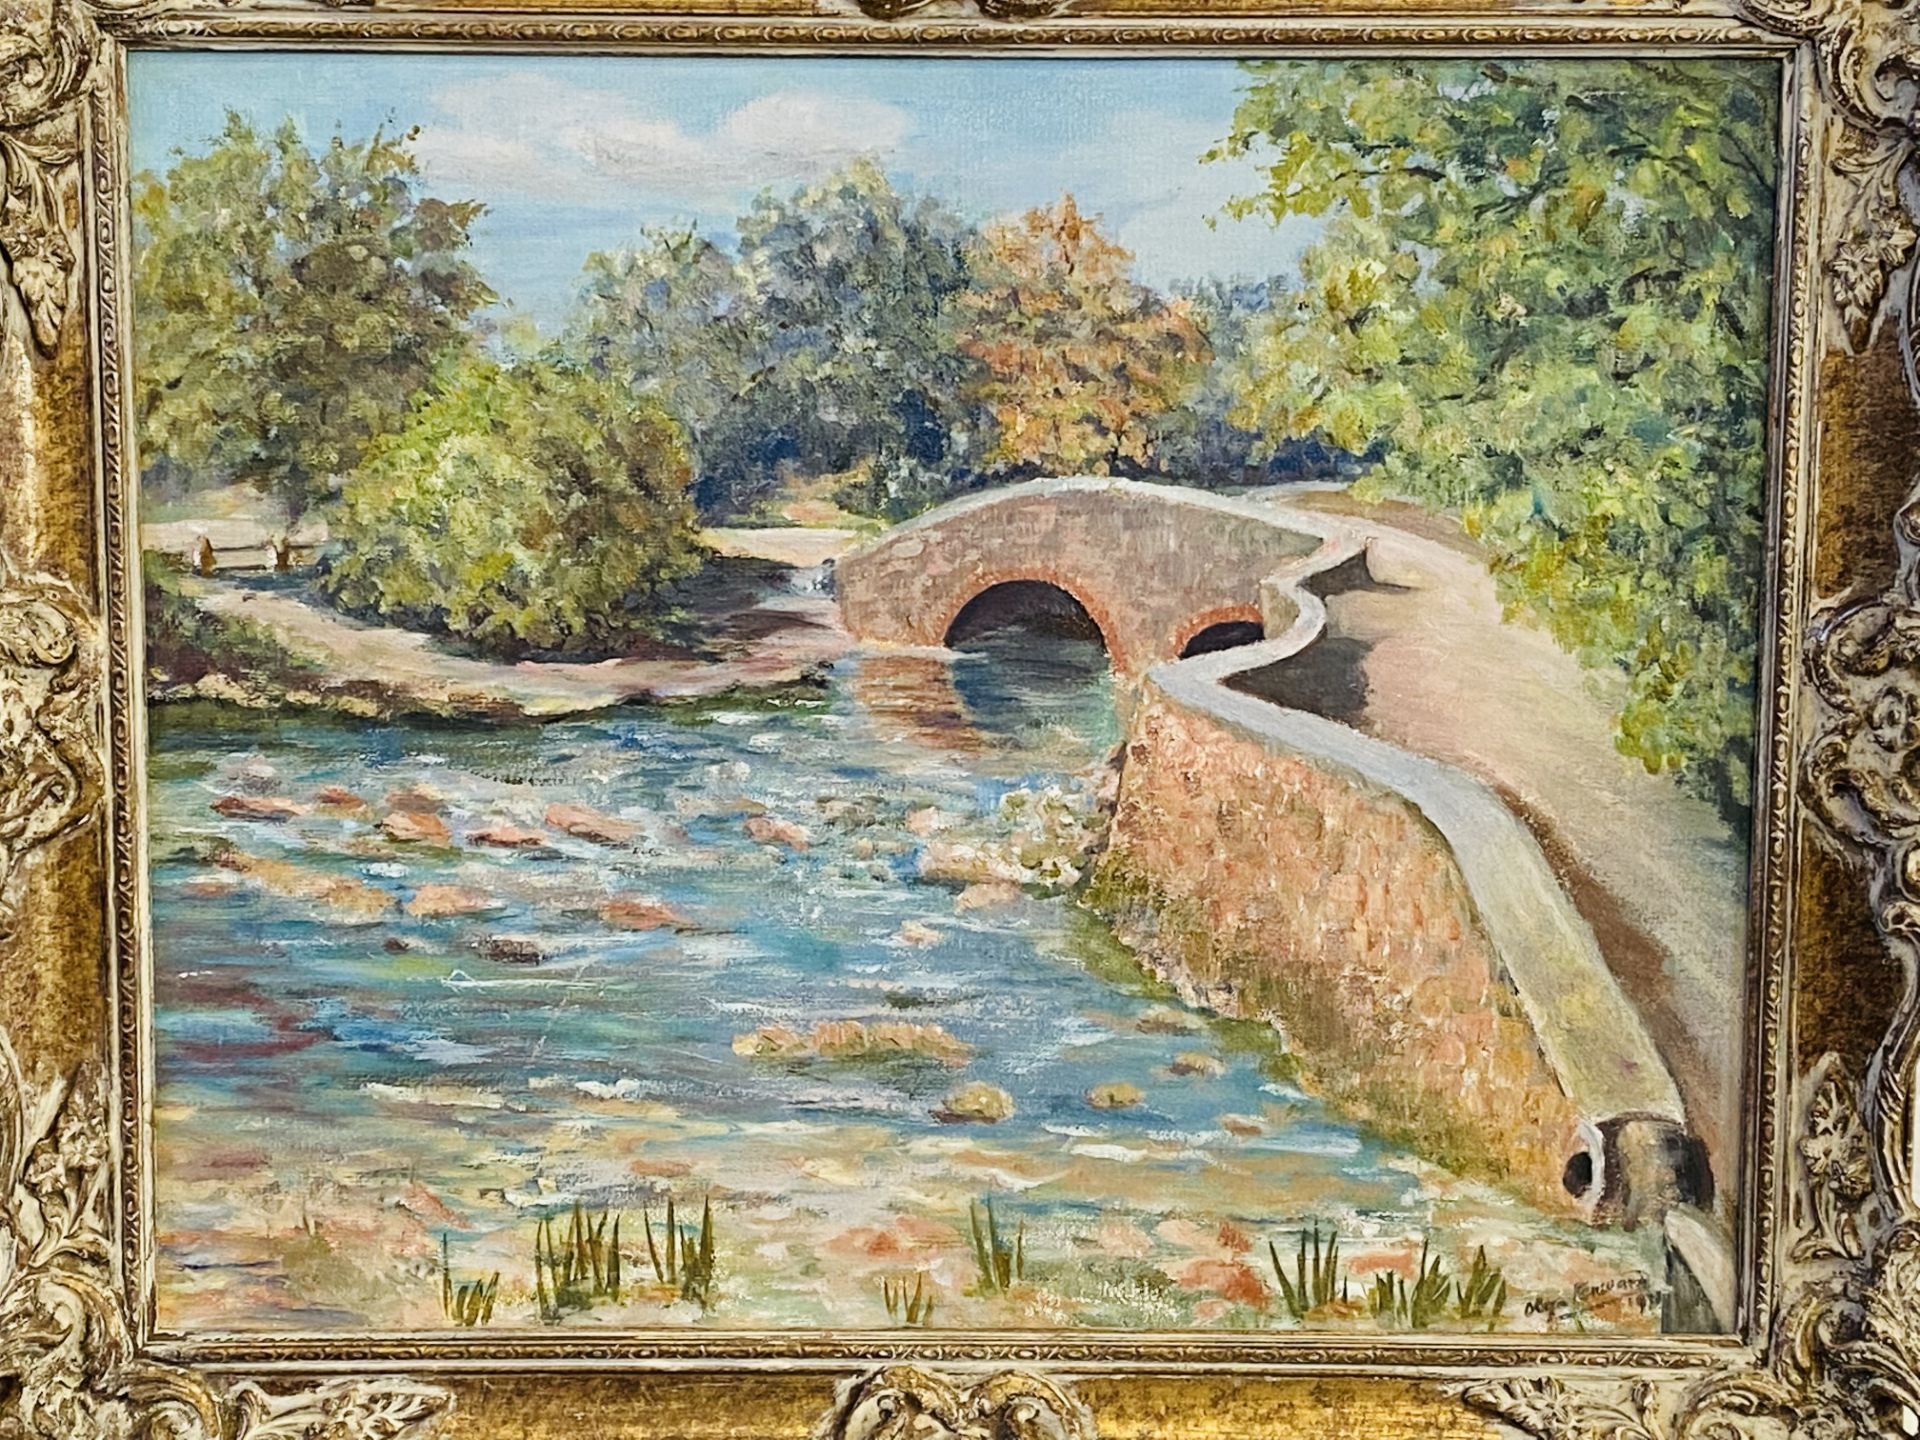 Framed oil on canvas